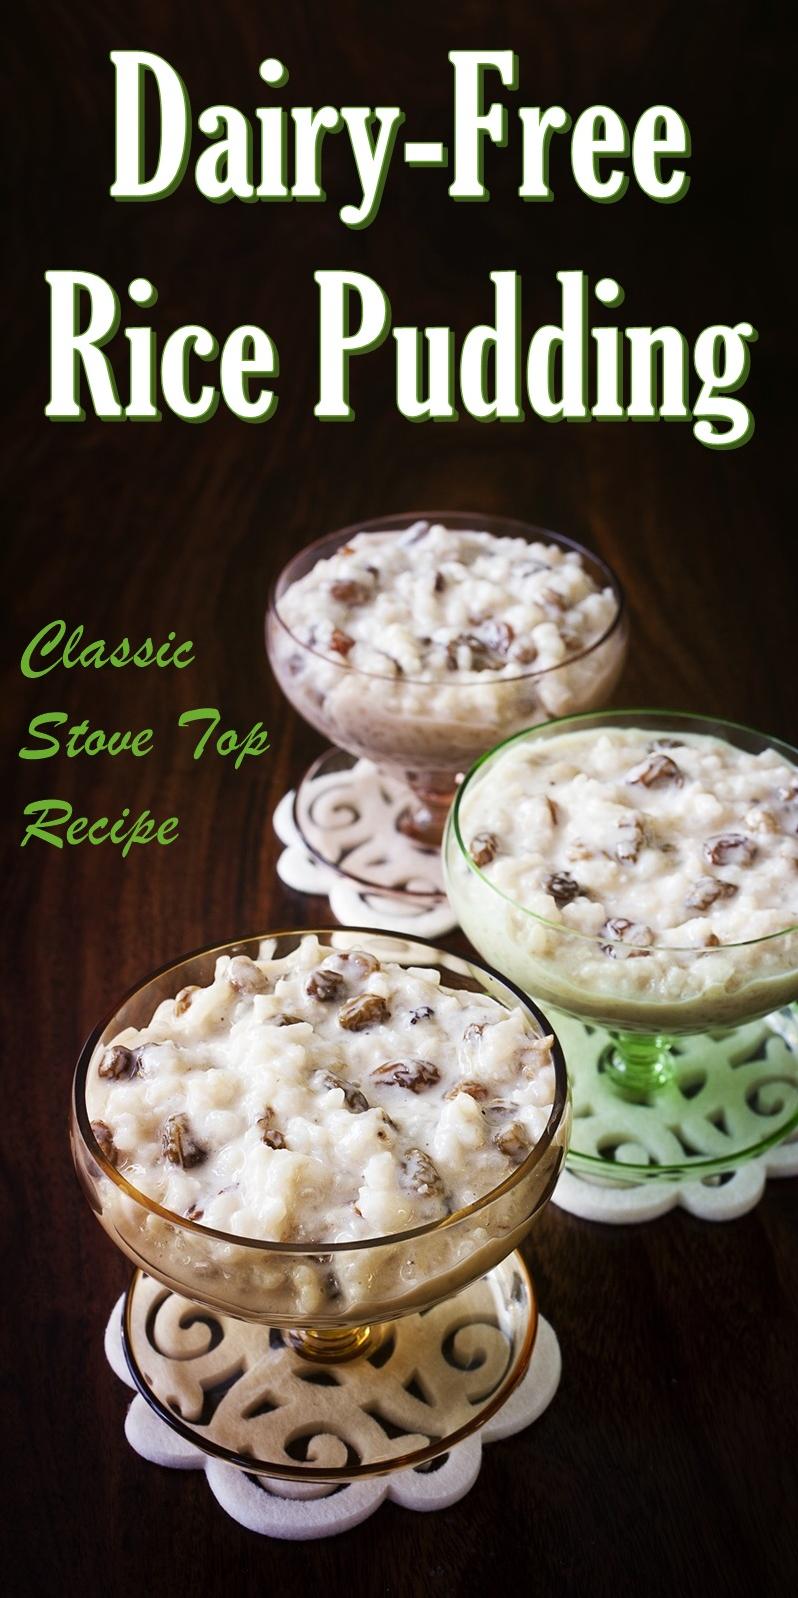 Creamy Stove Top Rice Pudding - Dairy Free